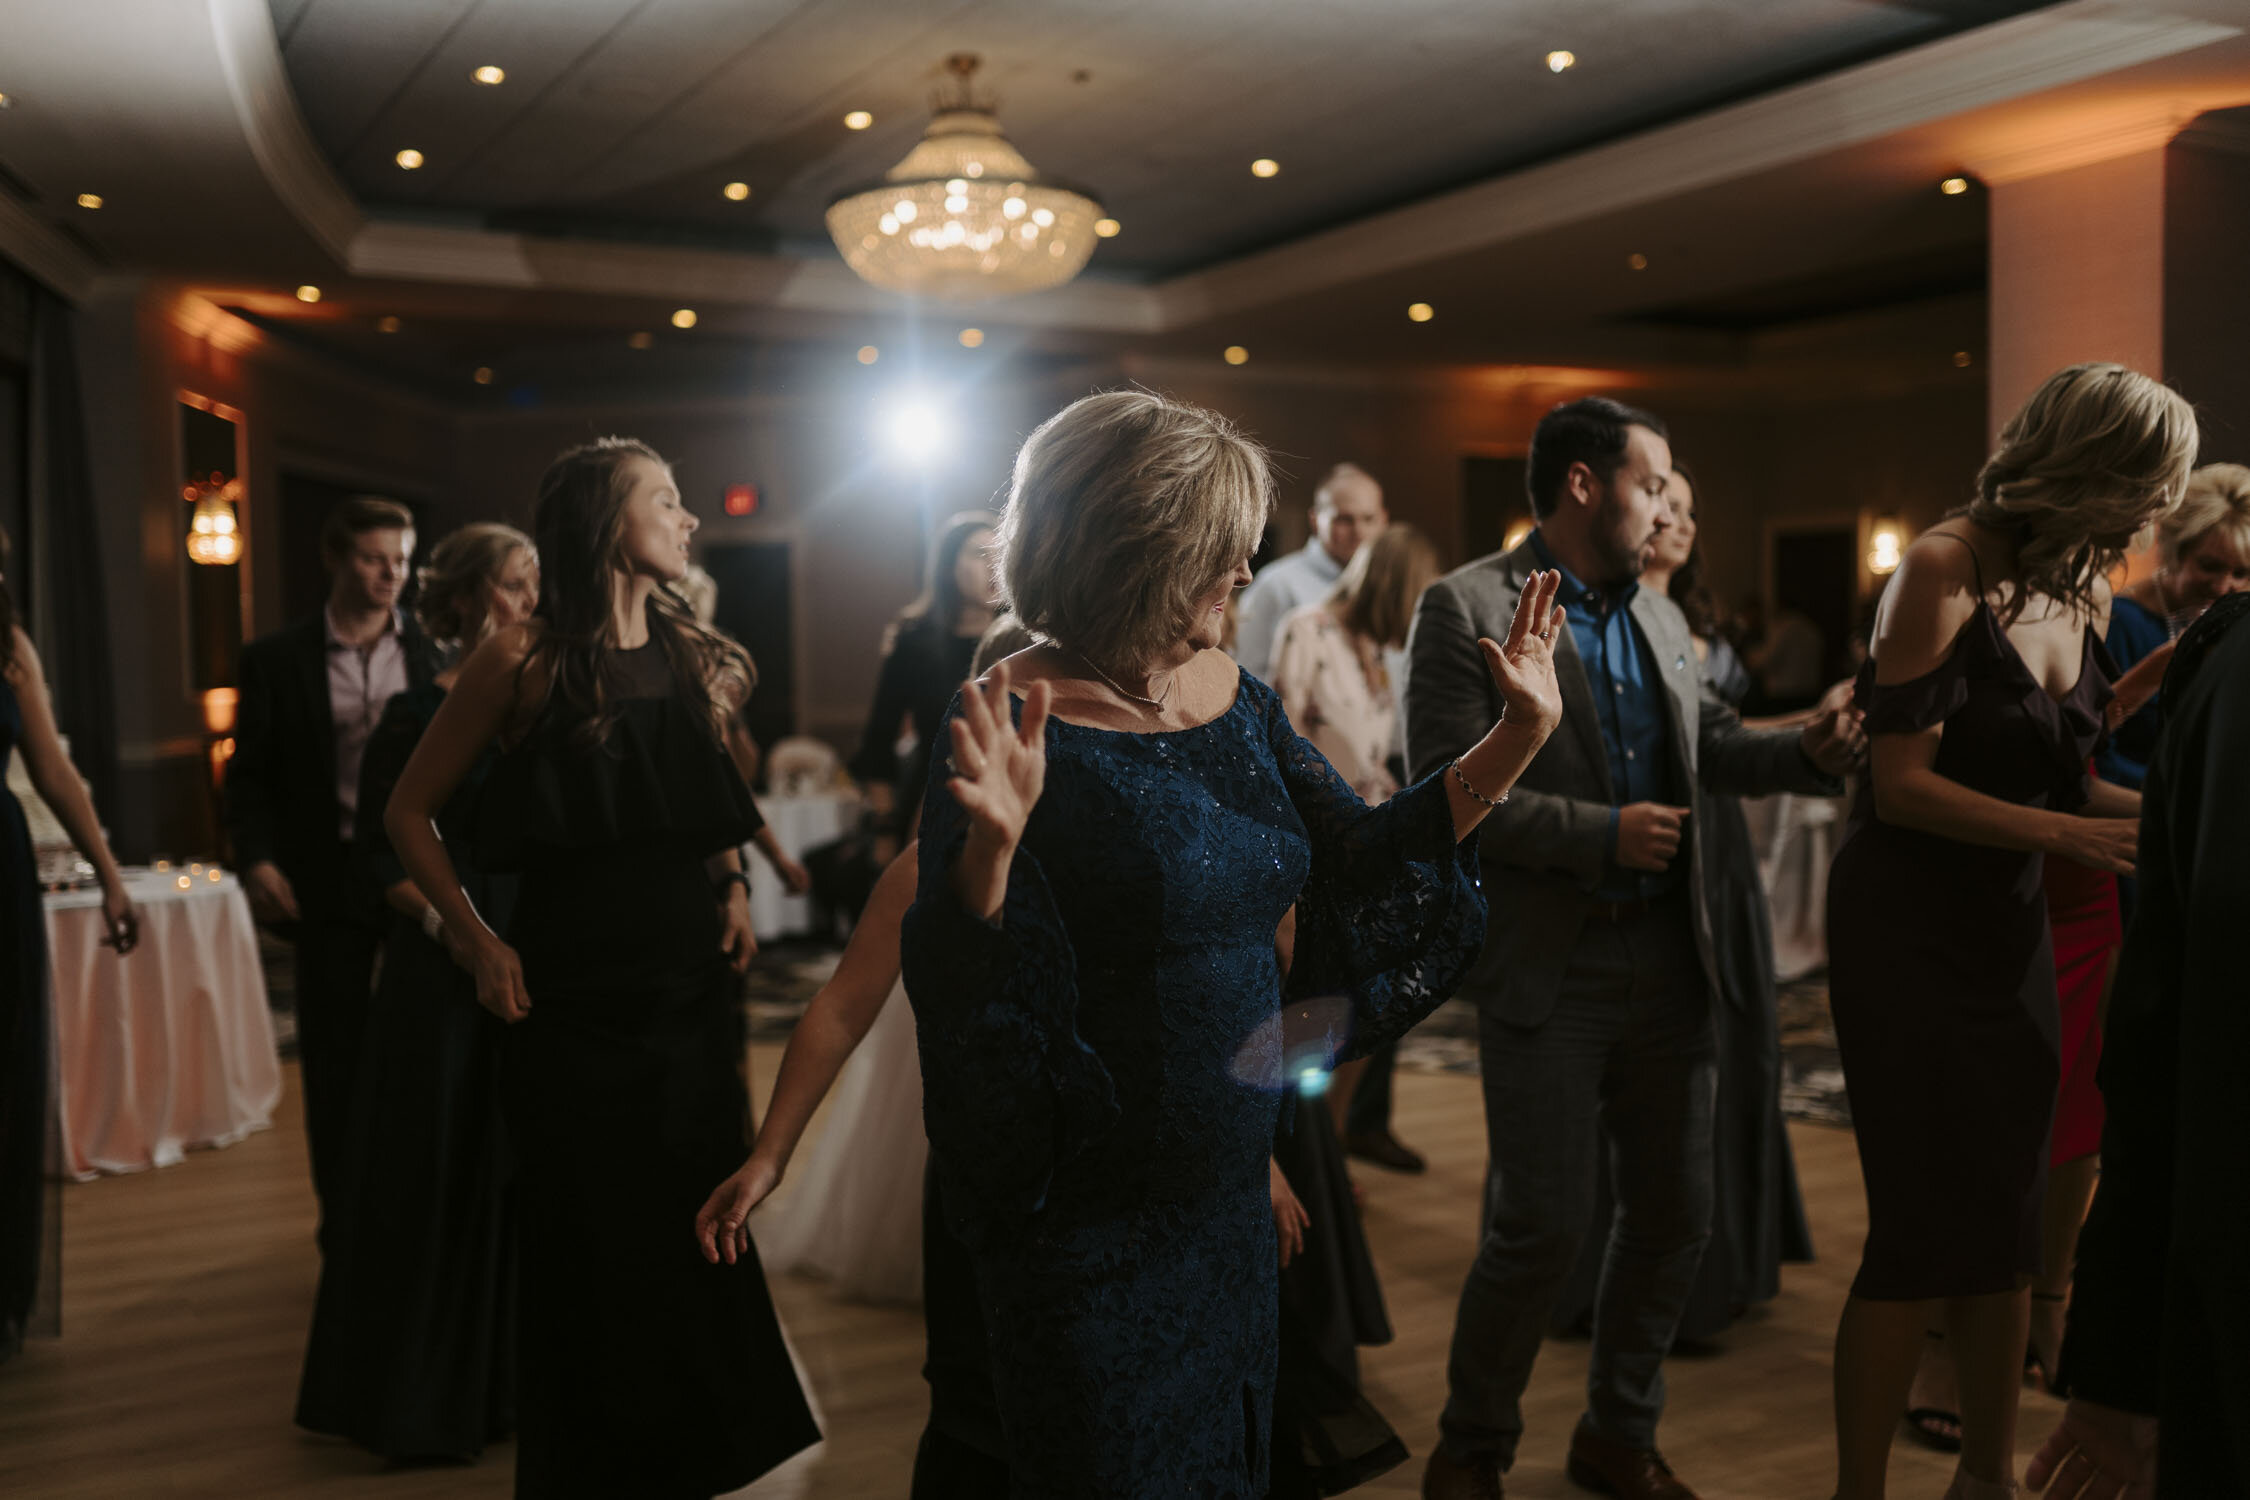 Classy and Elegant Reception at Grandover Resort Wedding by Kayli LaFon Photography | Greensboro Winston-Salem, NC Wedding Photographer